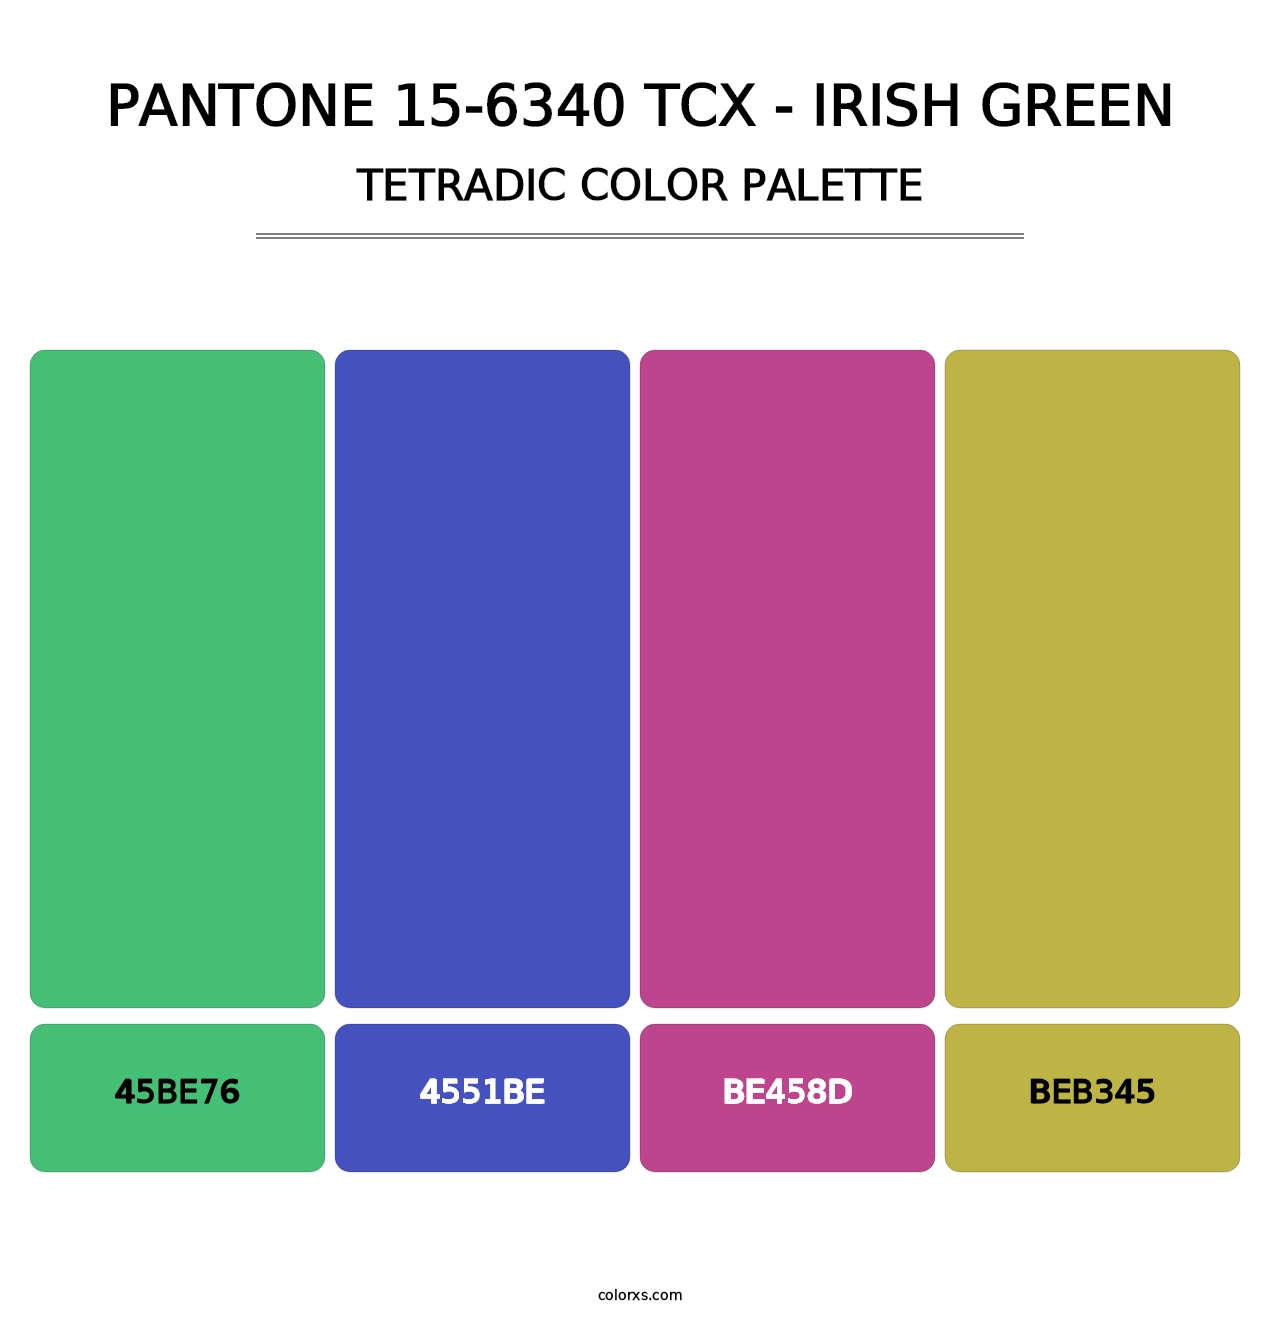 PANTONE 15-6340 TCX - Irish Green - Tetradic Color Palette